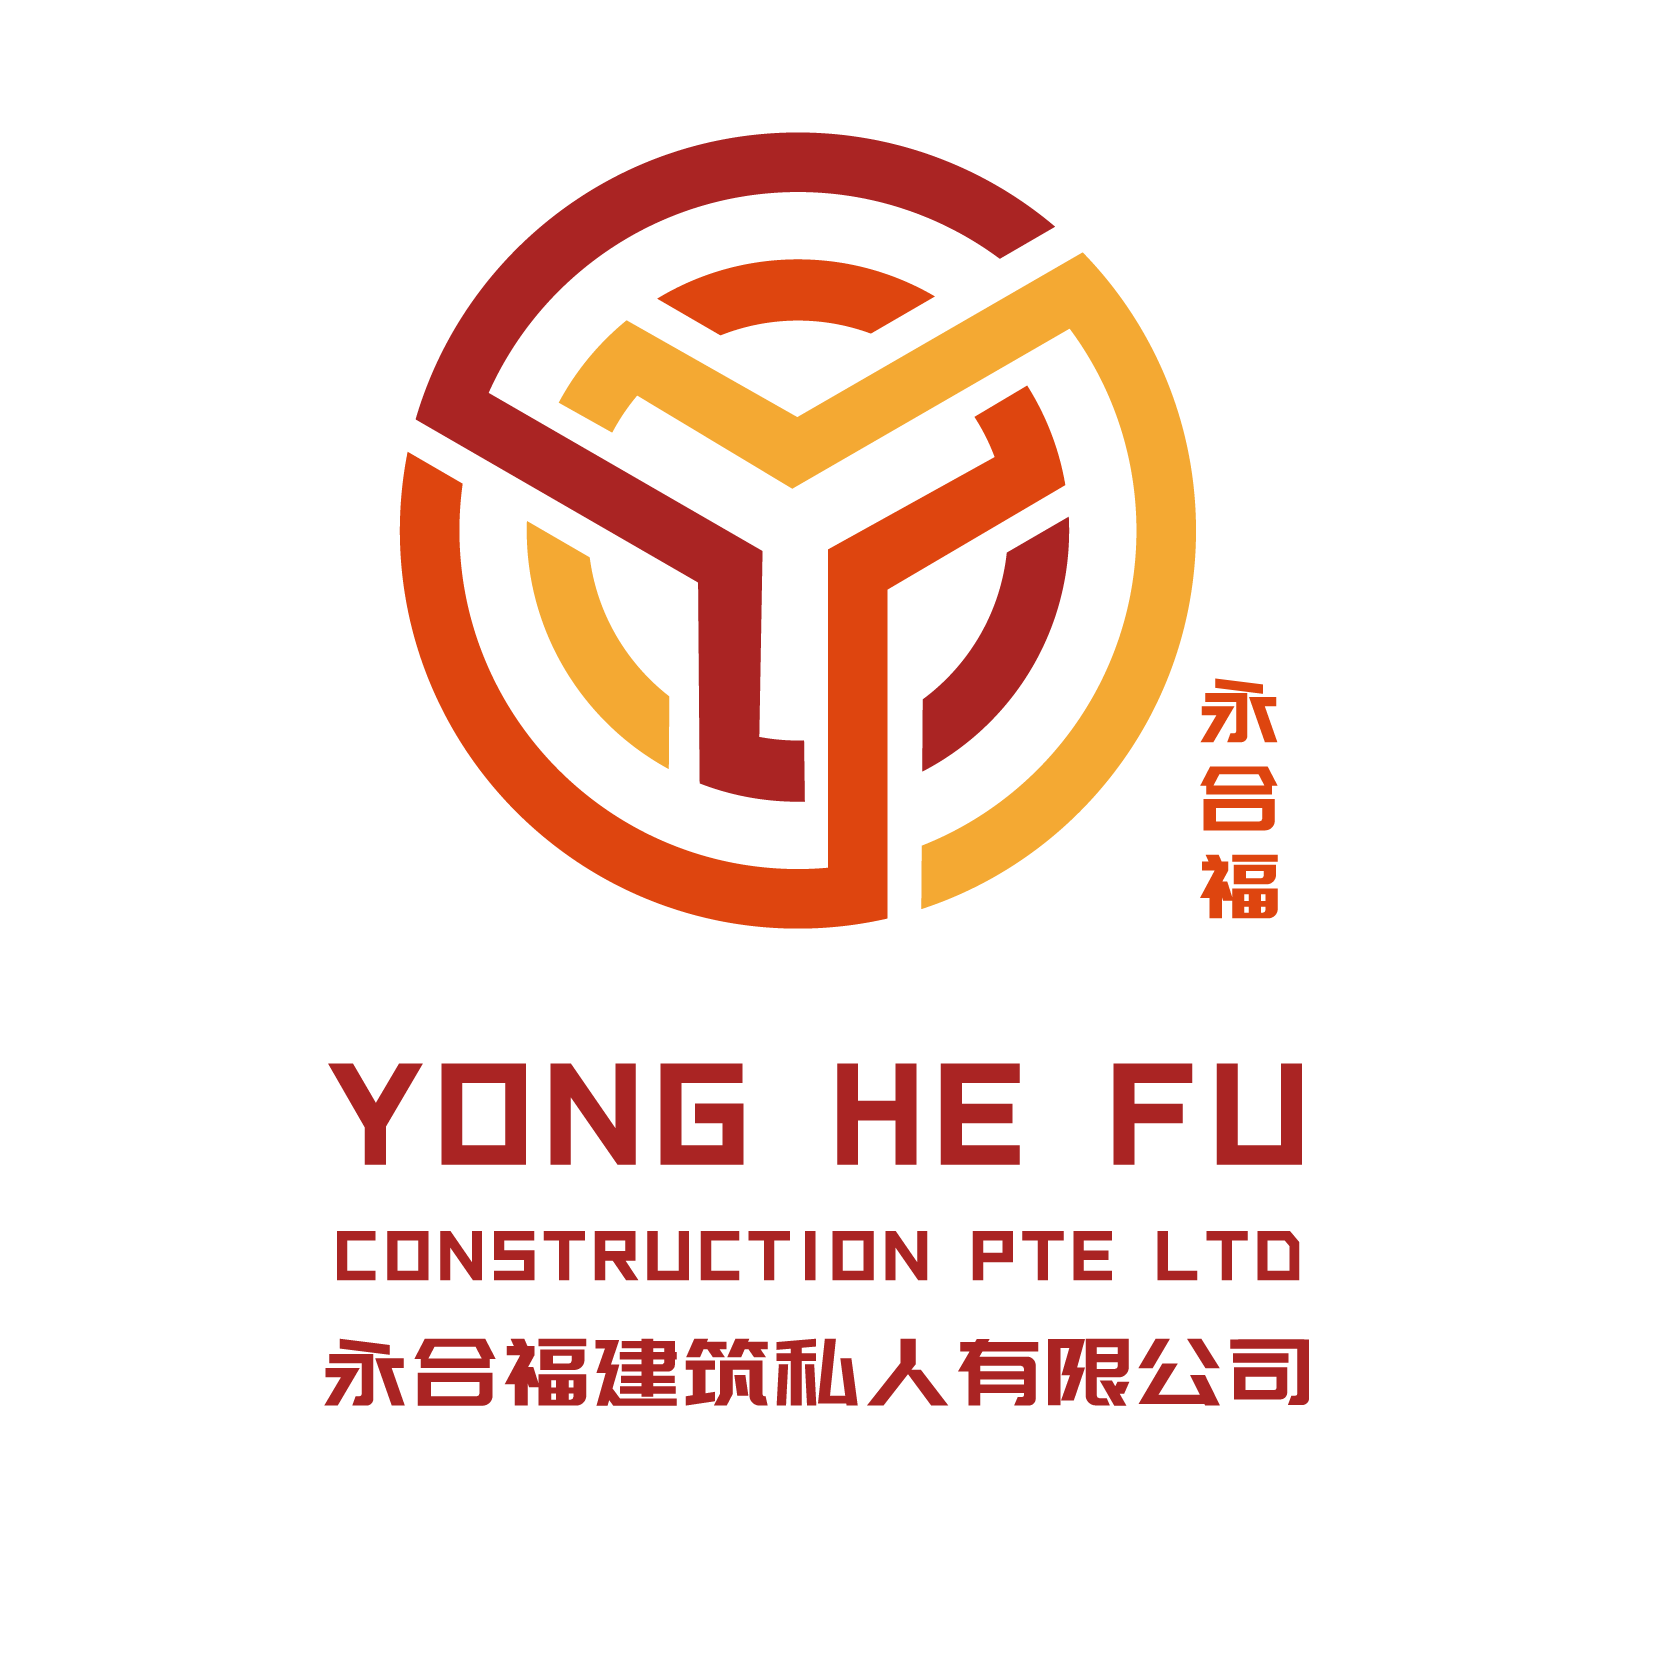 Yong He Fu Construction Pte. Ltd. company logo